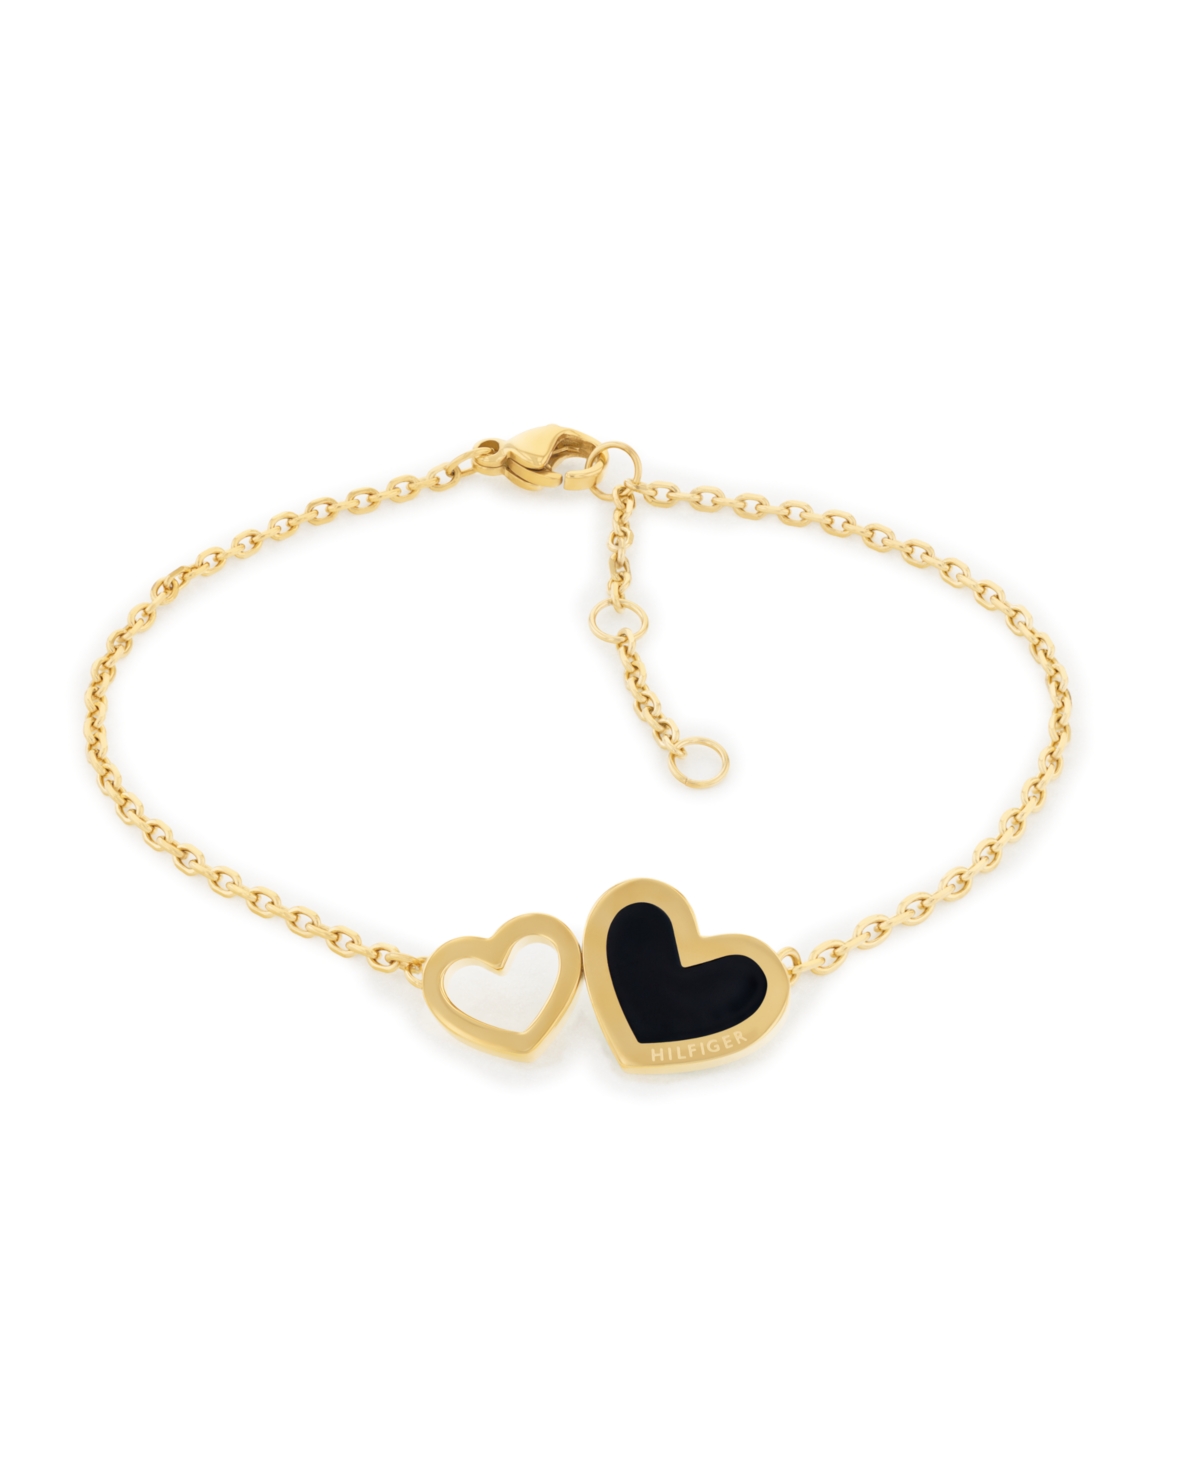 Black Enamel Heart Bracelet in 18K Gold Plated - Gold